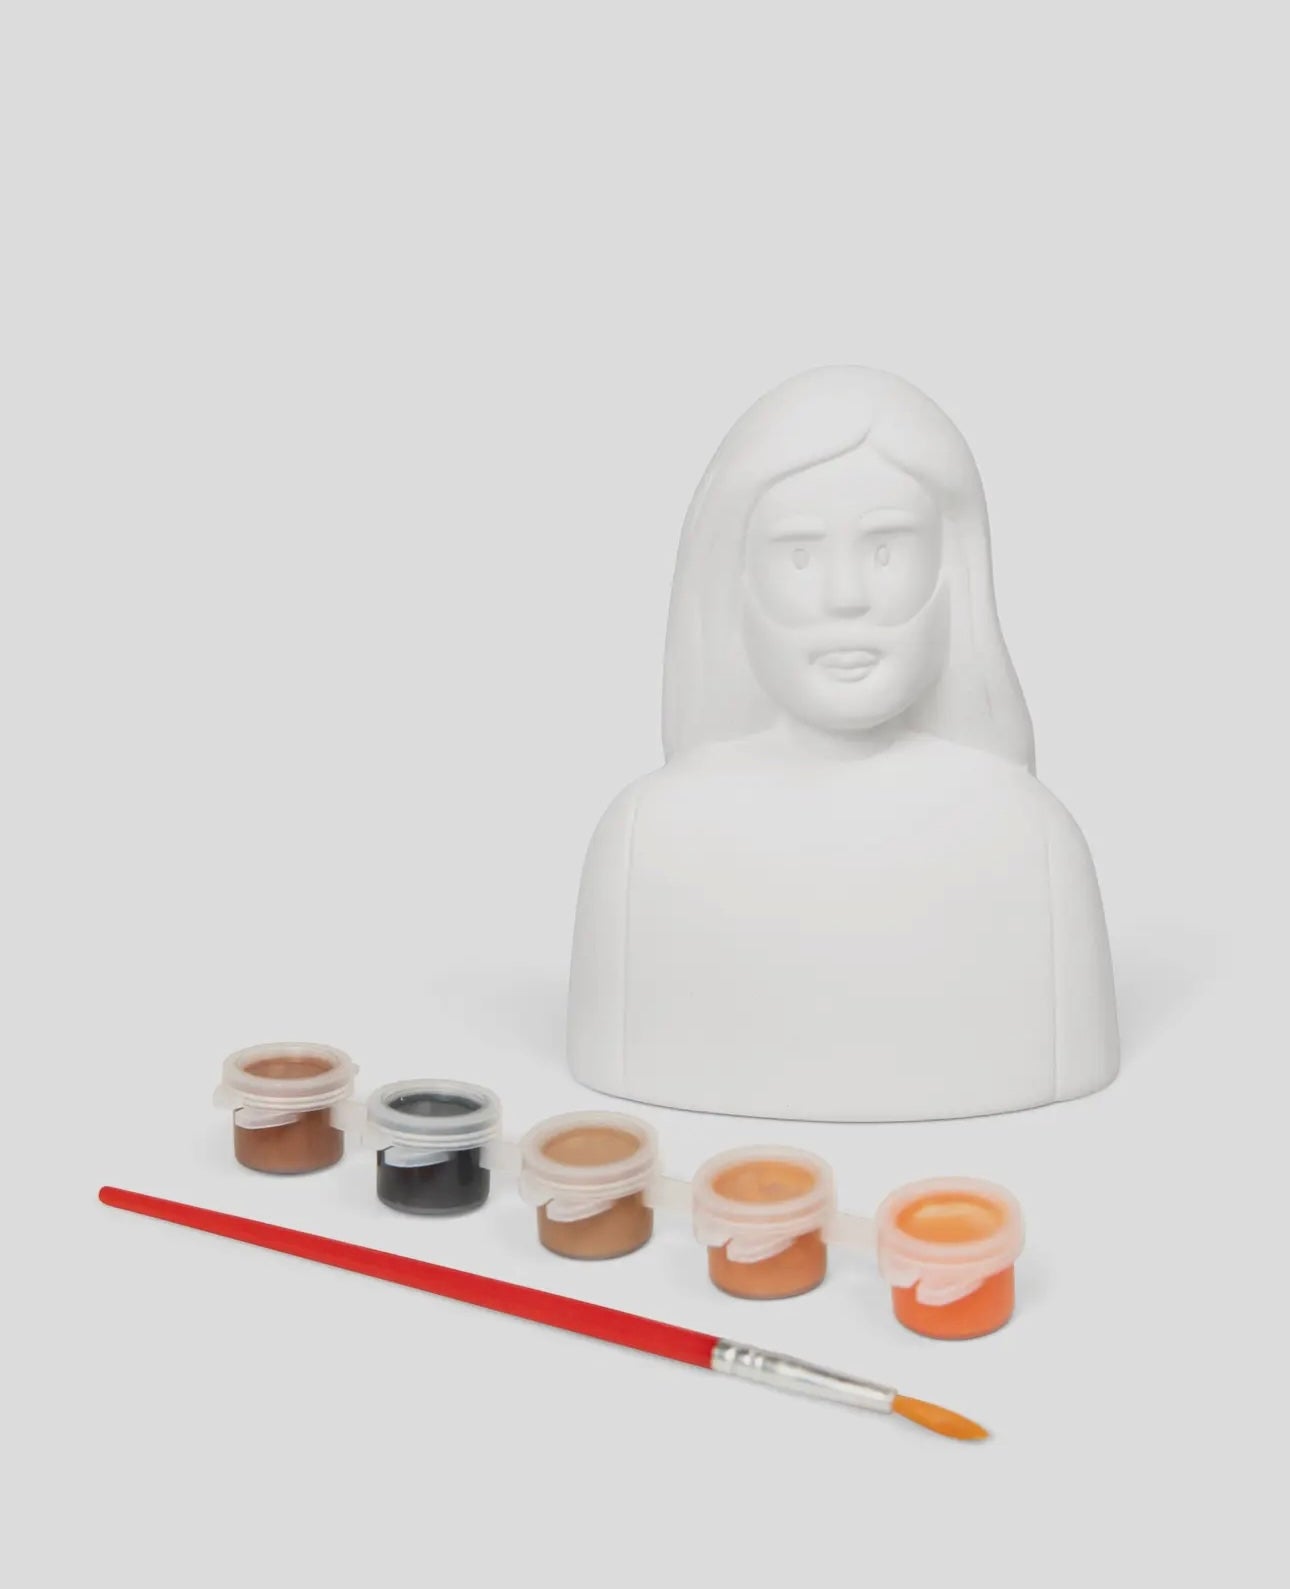 Paint Your Own Jesus Kit